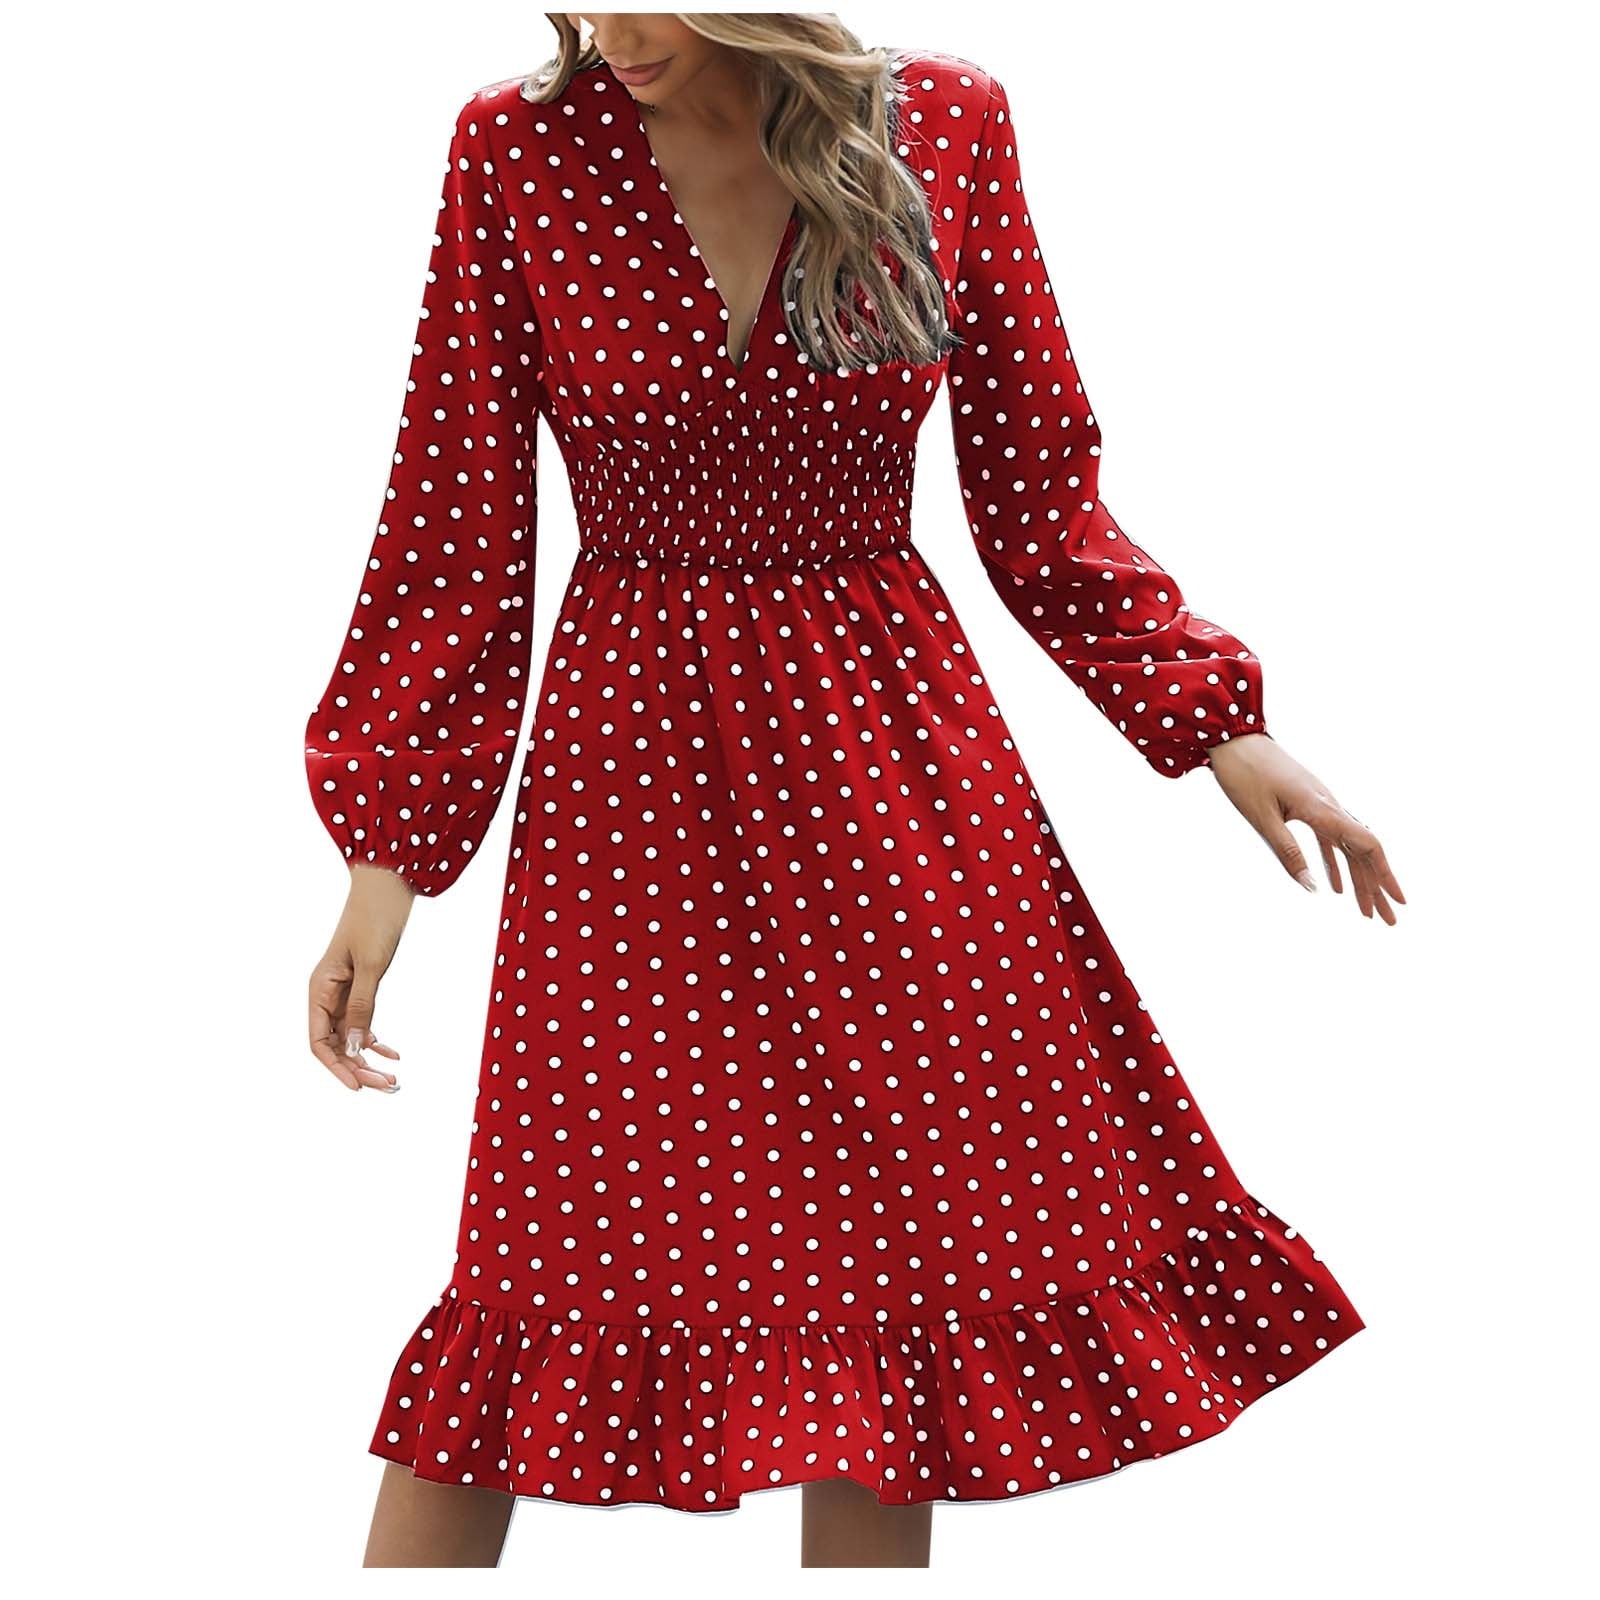 Herrnalise Women's V Neck polka dots dress Fashion Long Sleeve Print  LadiesHoliday Outing Long Dress S-2XL 